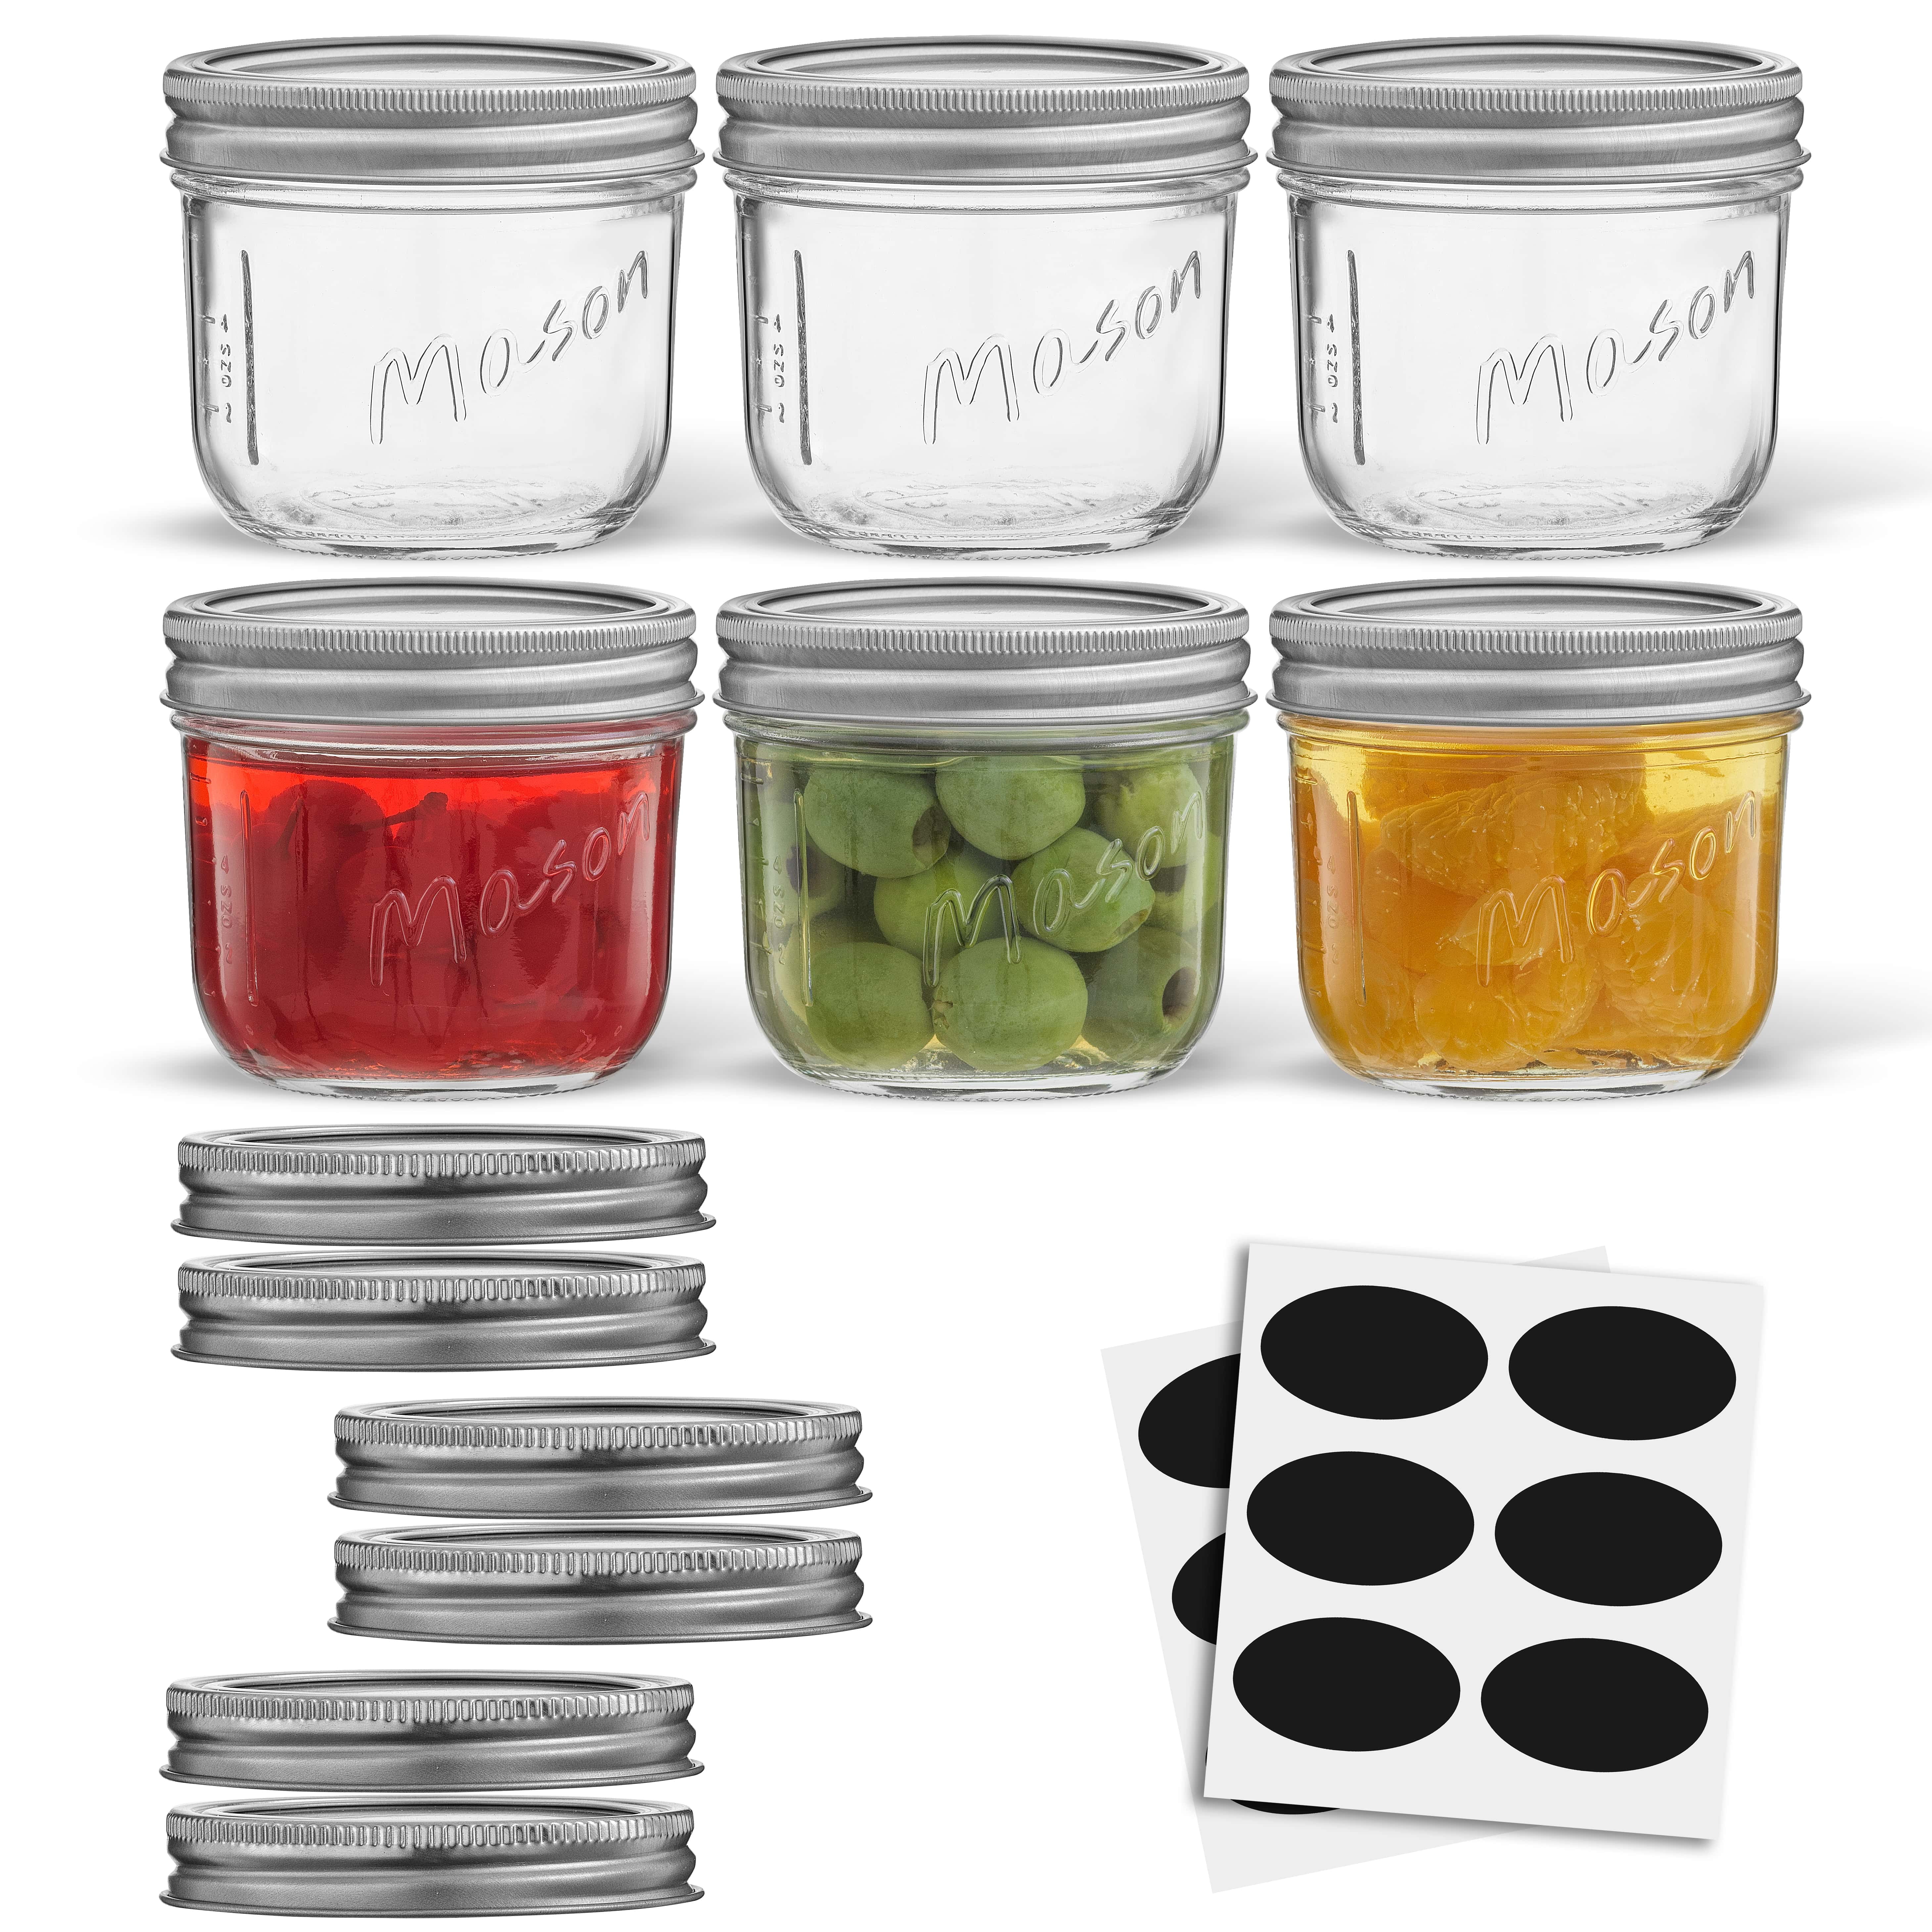 JoyJolt Large Glass Food Storage, Pickling Jars with Airtight Seal